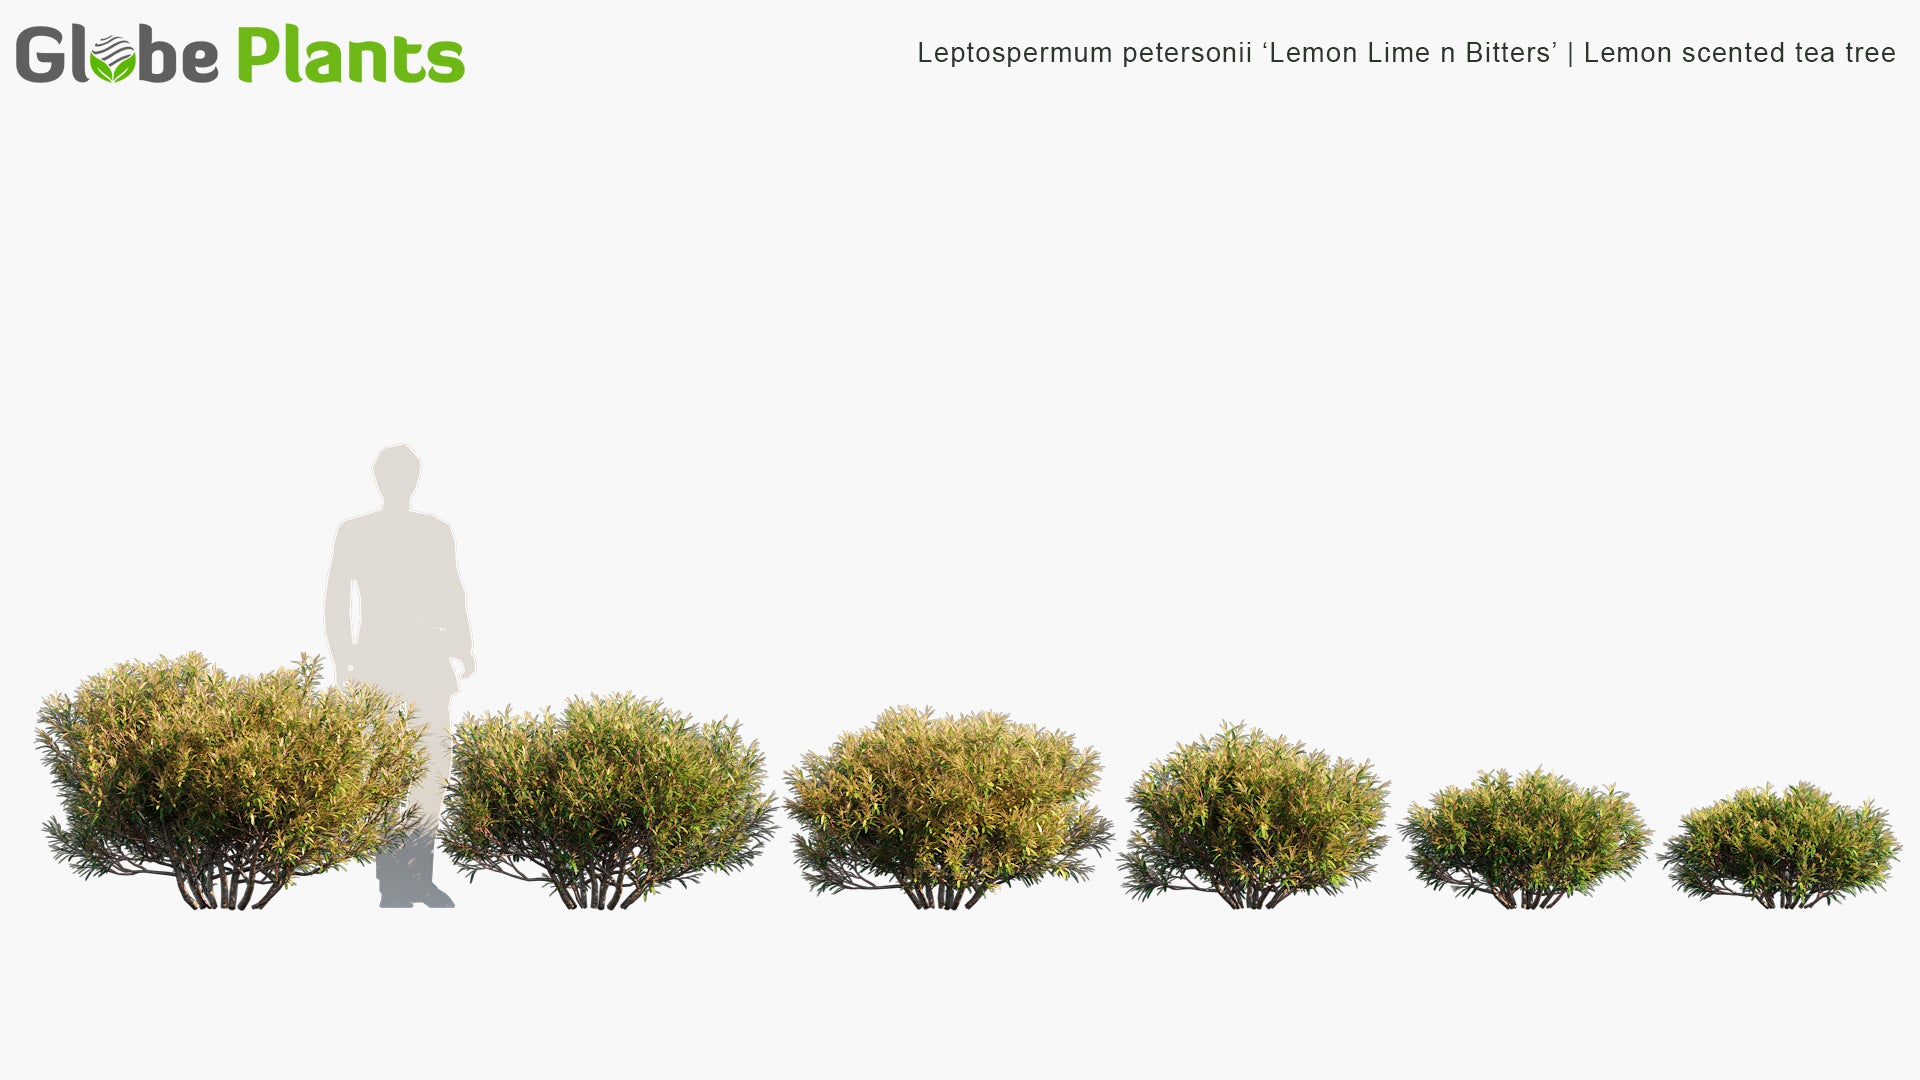 Leptospermum Petersonii 'Lemon Lime n Bitters' - Lemon Scented Tea Tree